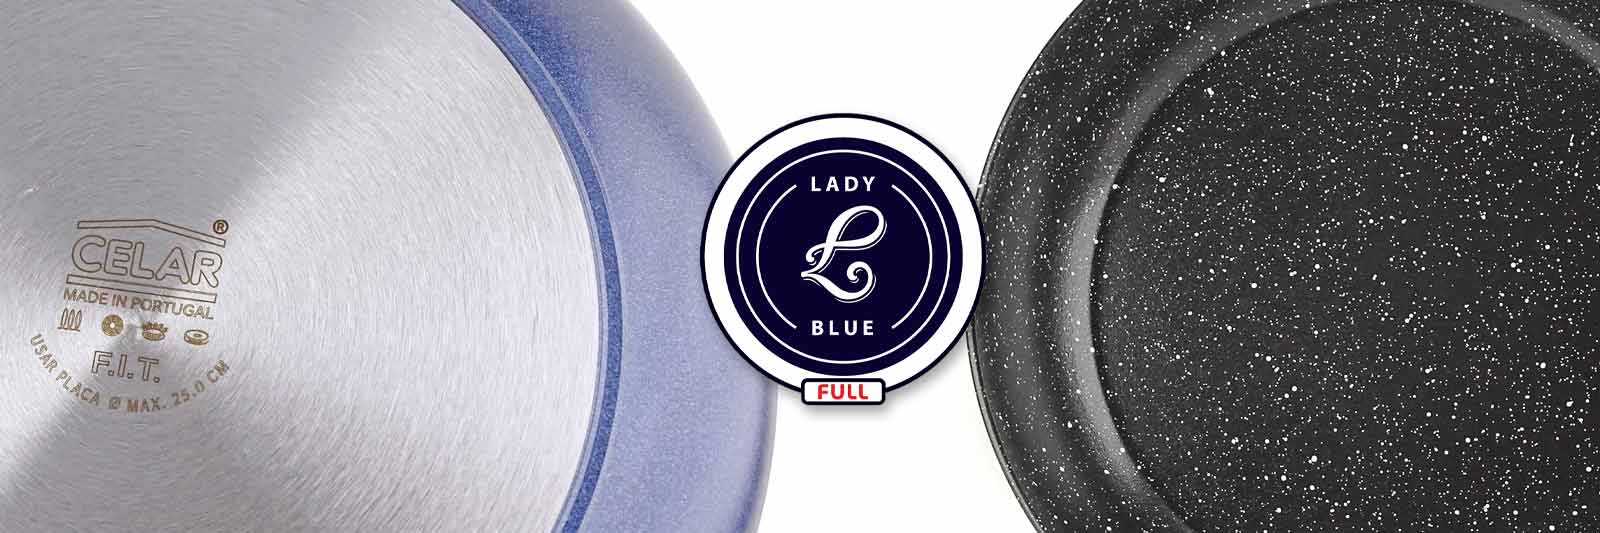 Lady Blue Ceramic